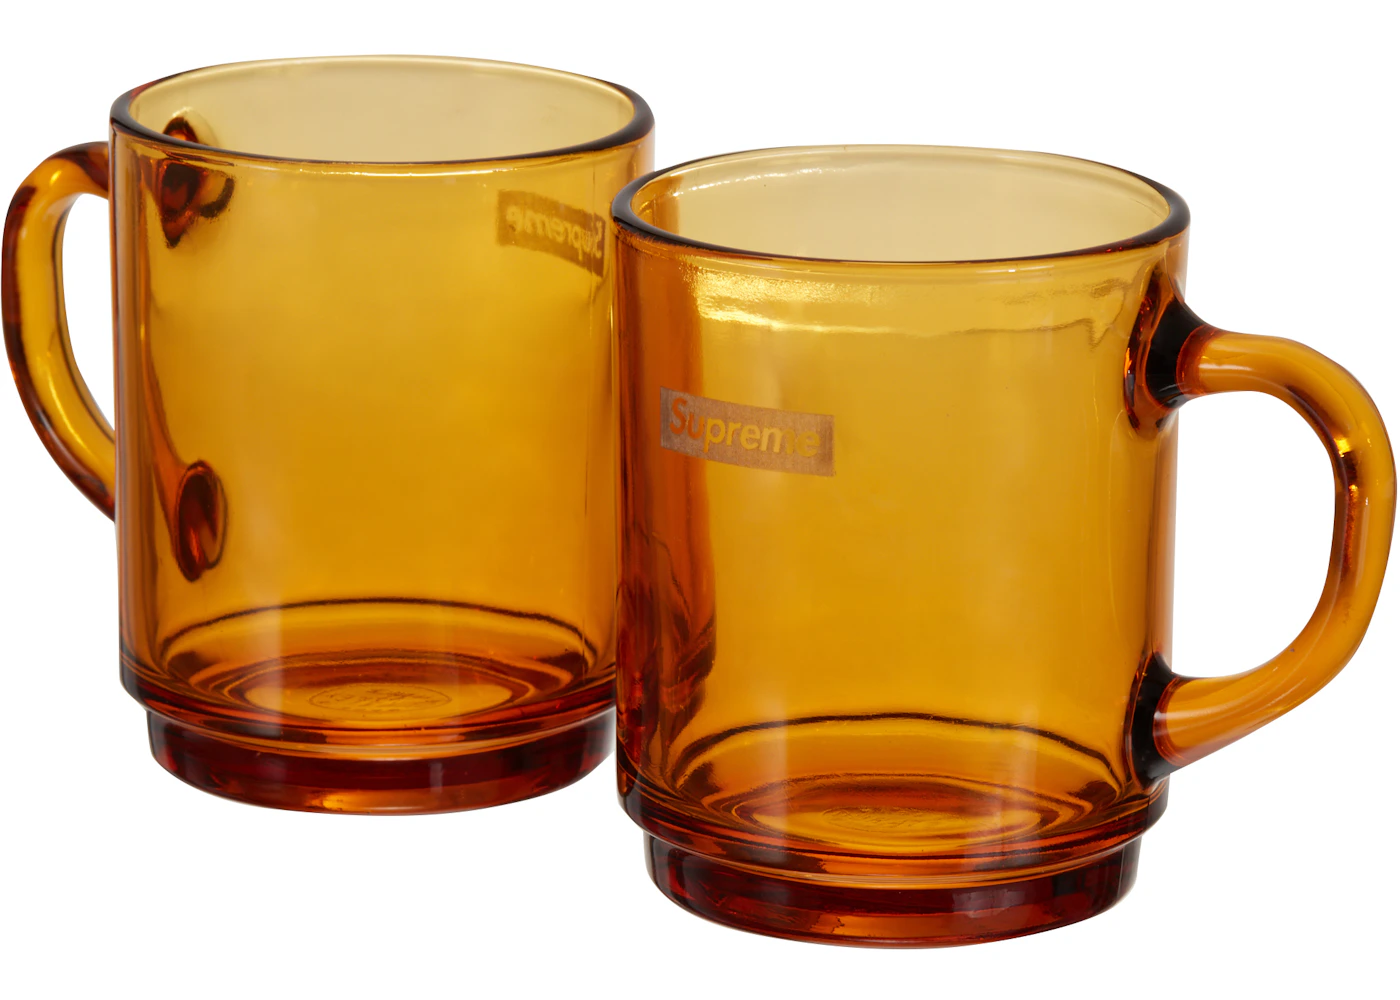 Supreme Duralex Glass Mugs (Set of 6) Amber - SS23 - US